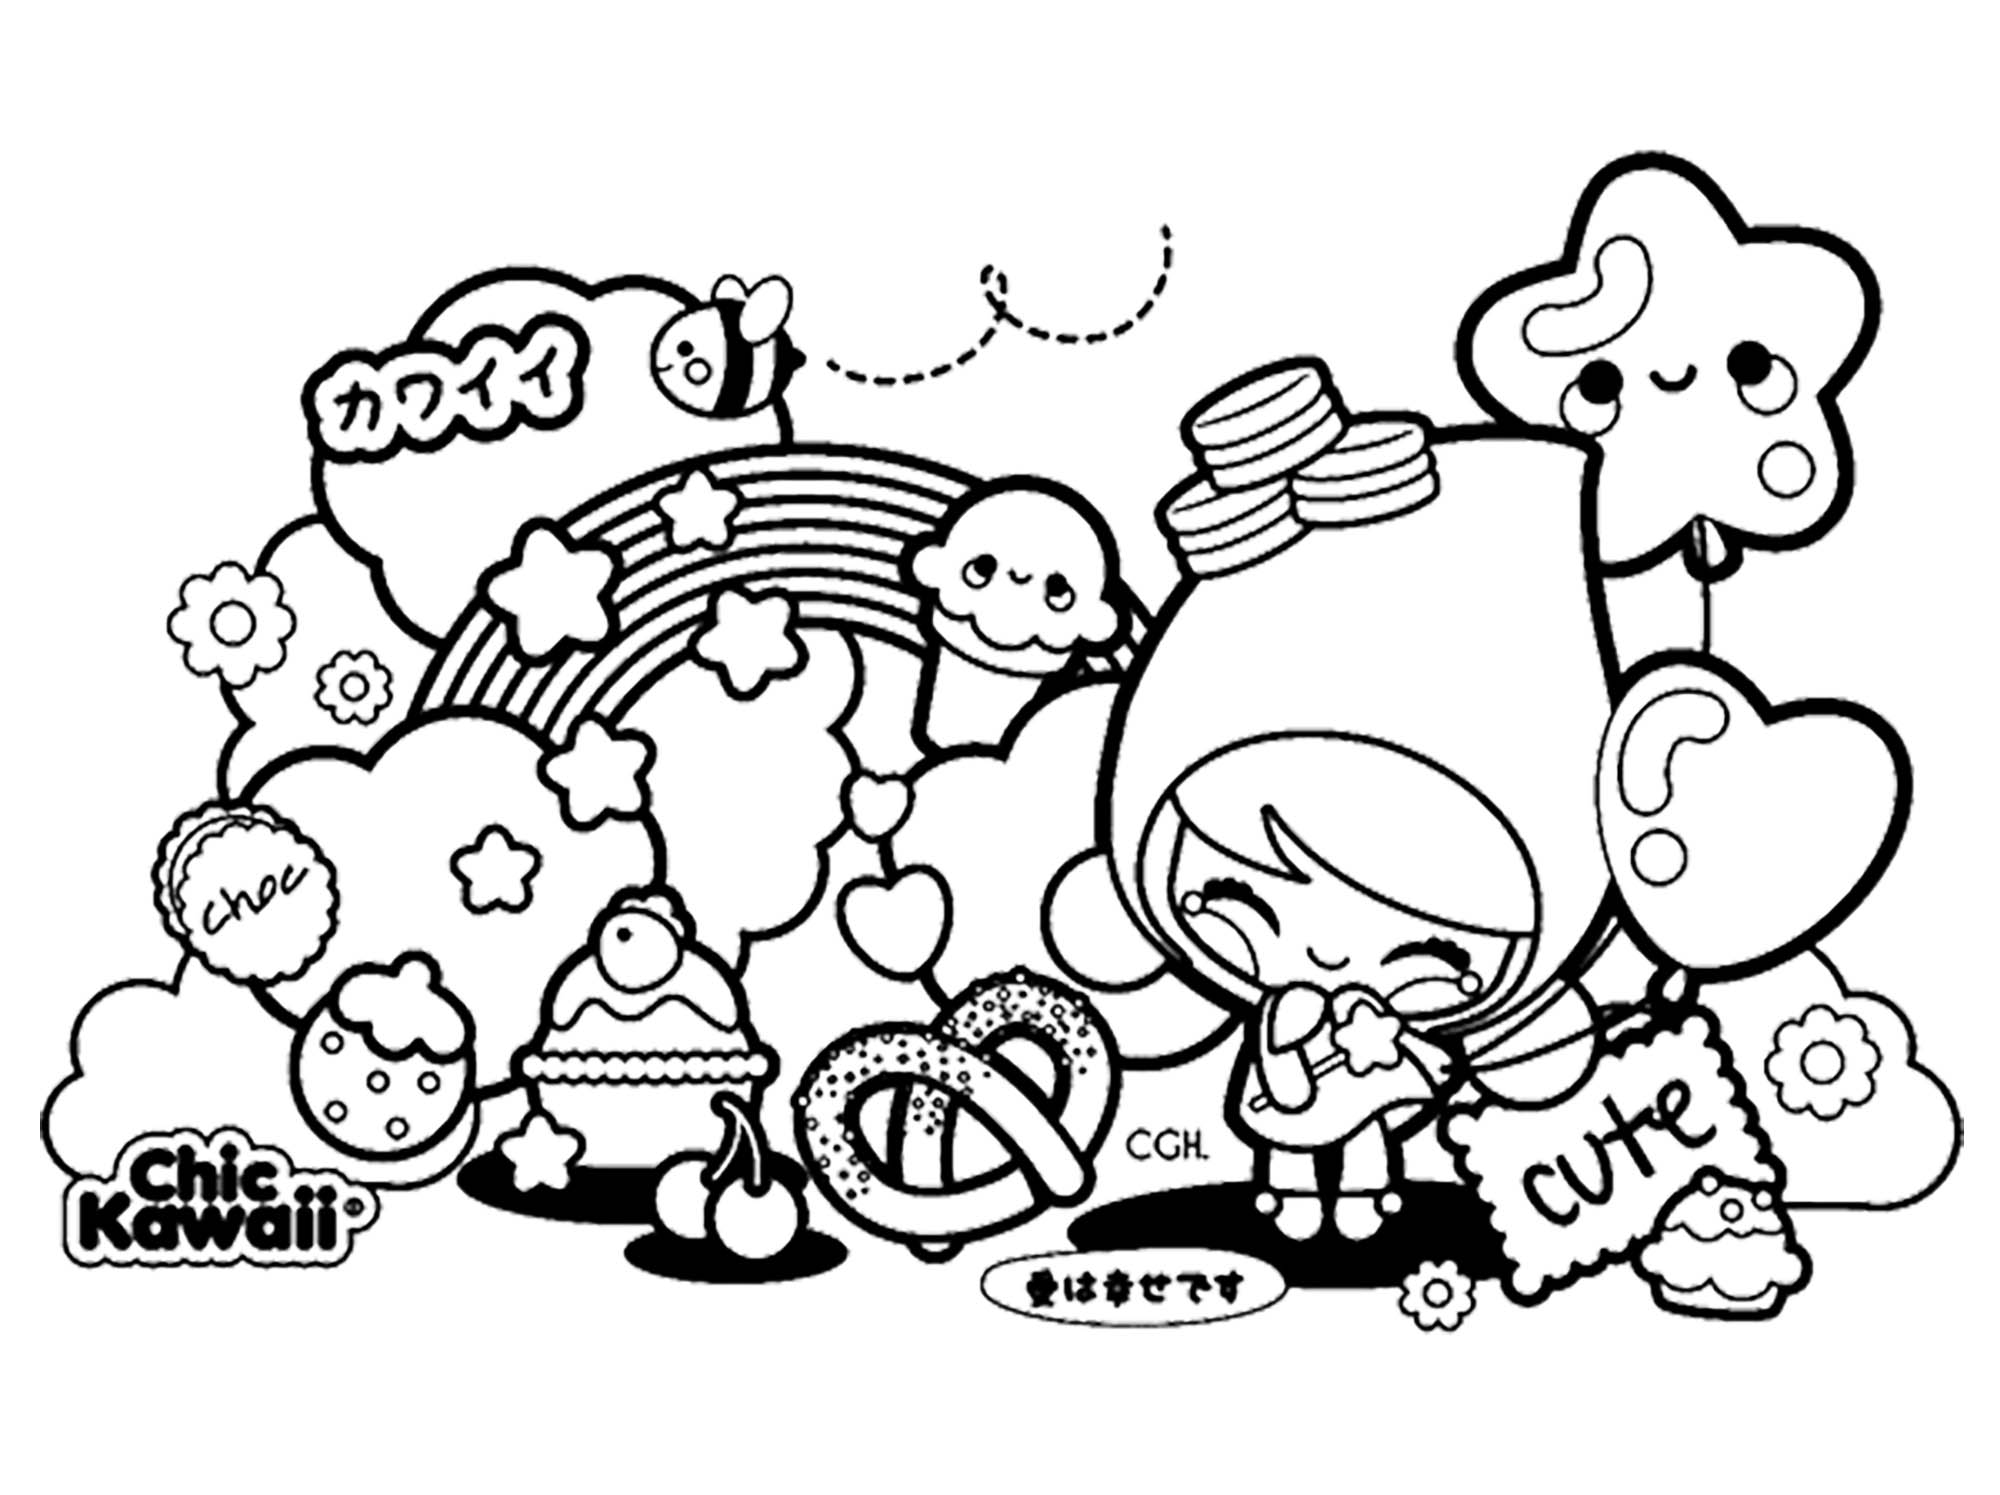 Joli dessin Kawaii, avec de mignonnes créatures, Artiste : Chic Kawaii